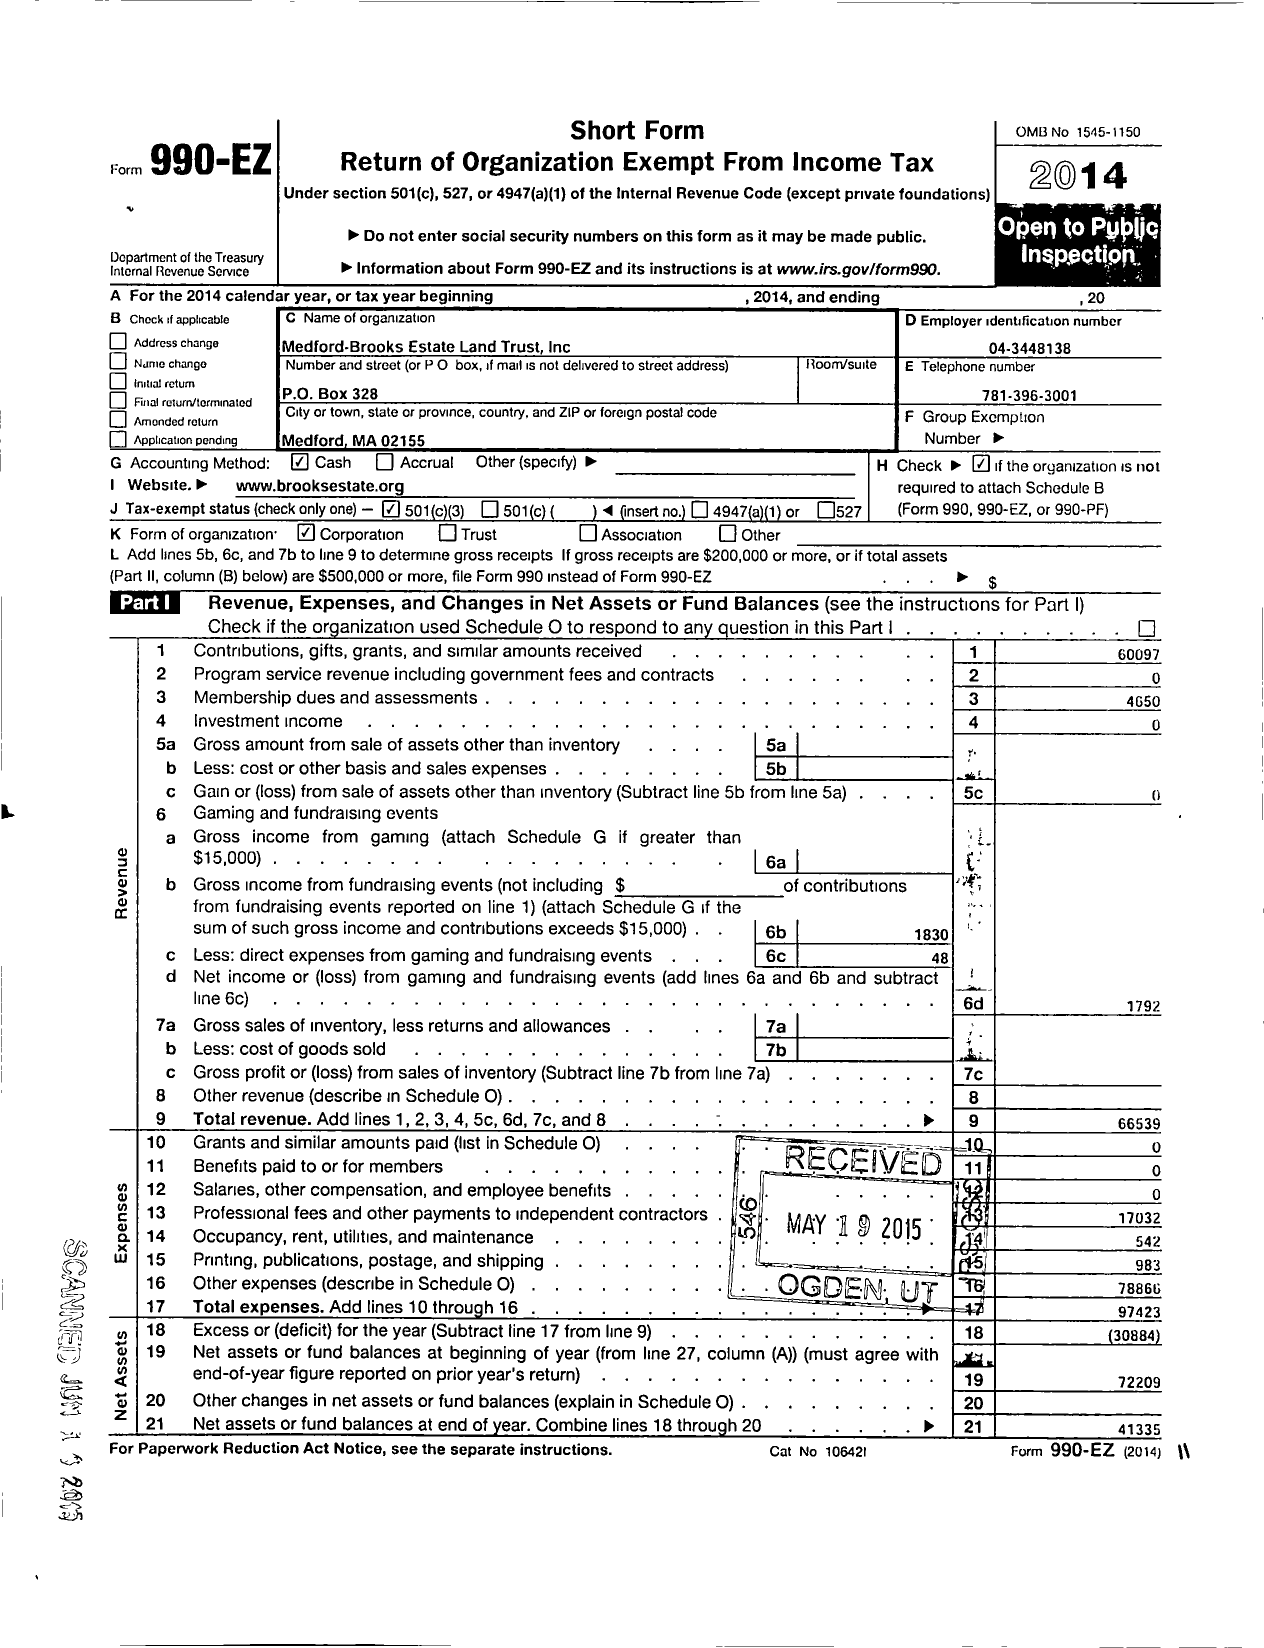 Image of first page of 2014 Form 990EZ for Medford-Brooks Estate Land Trust